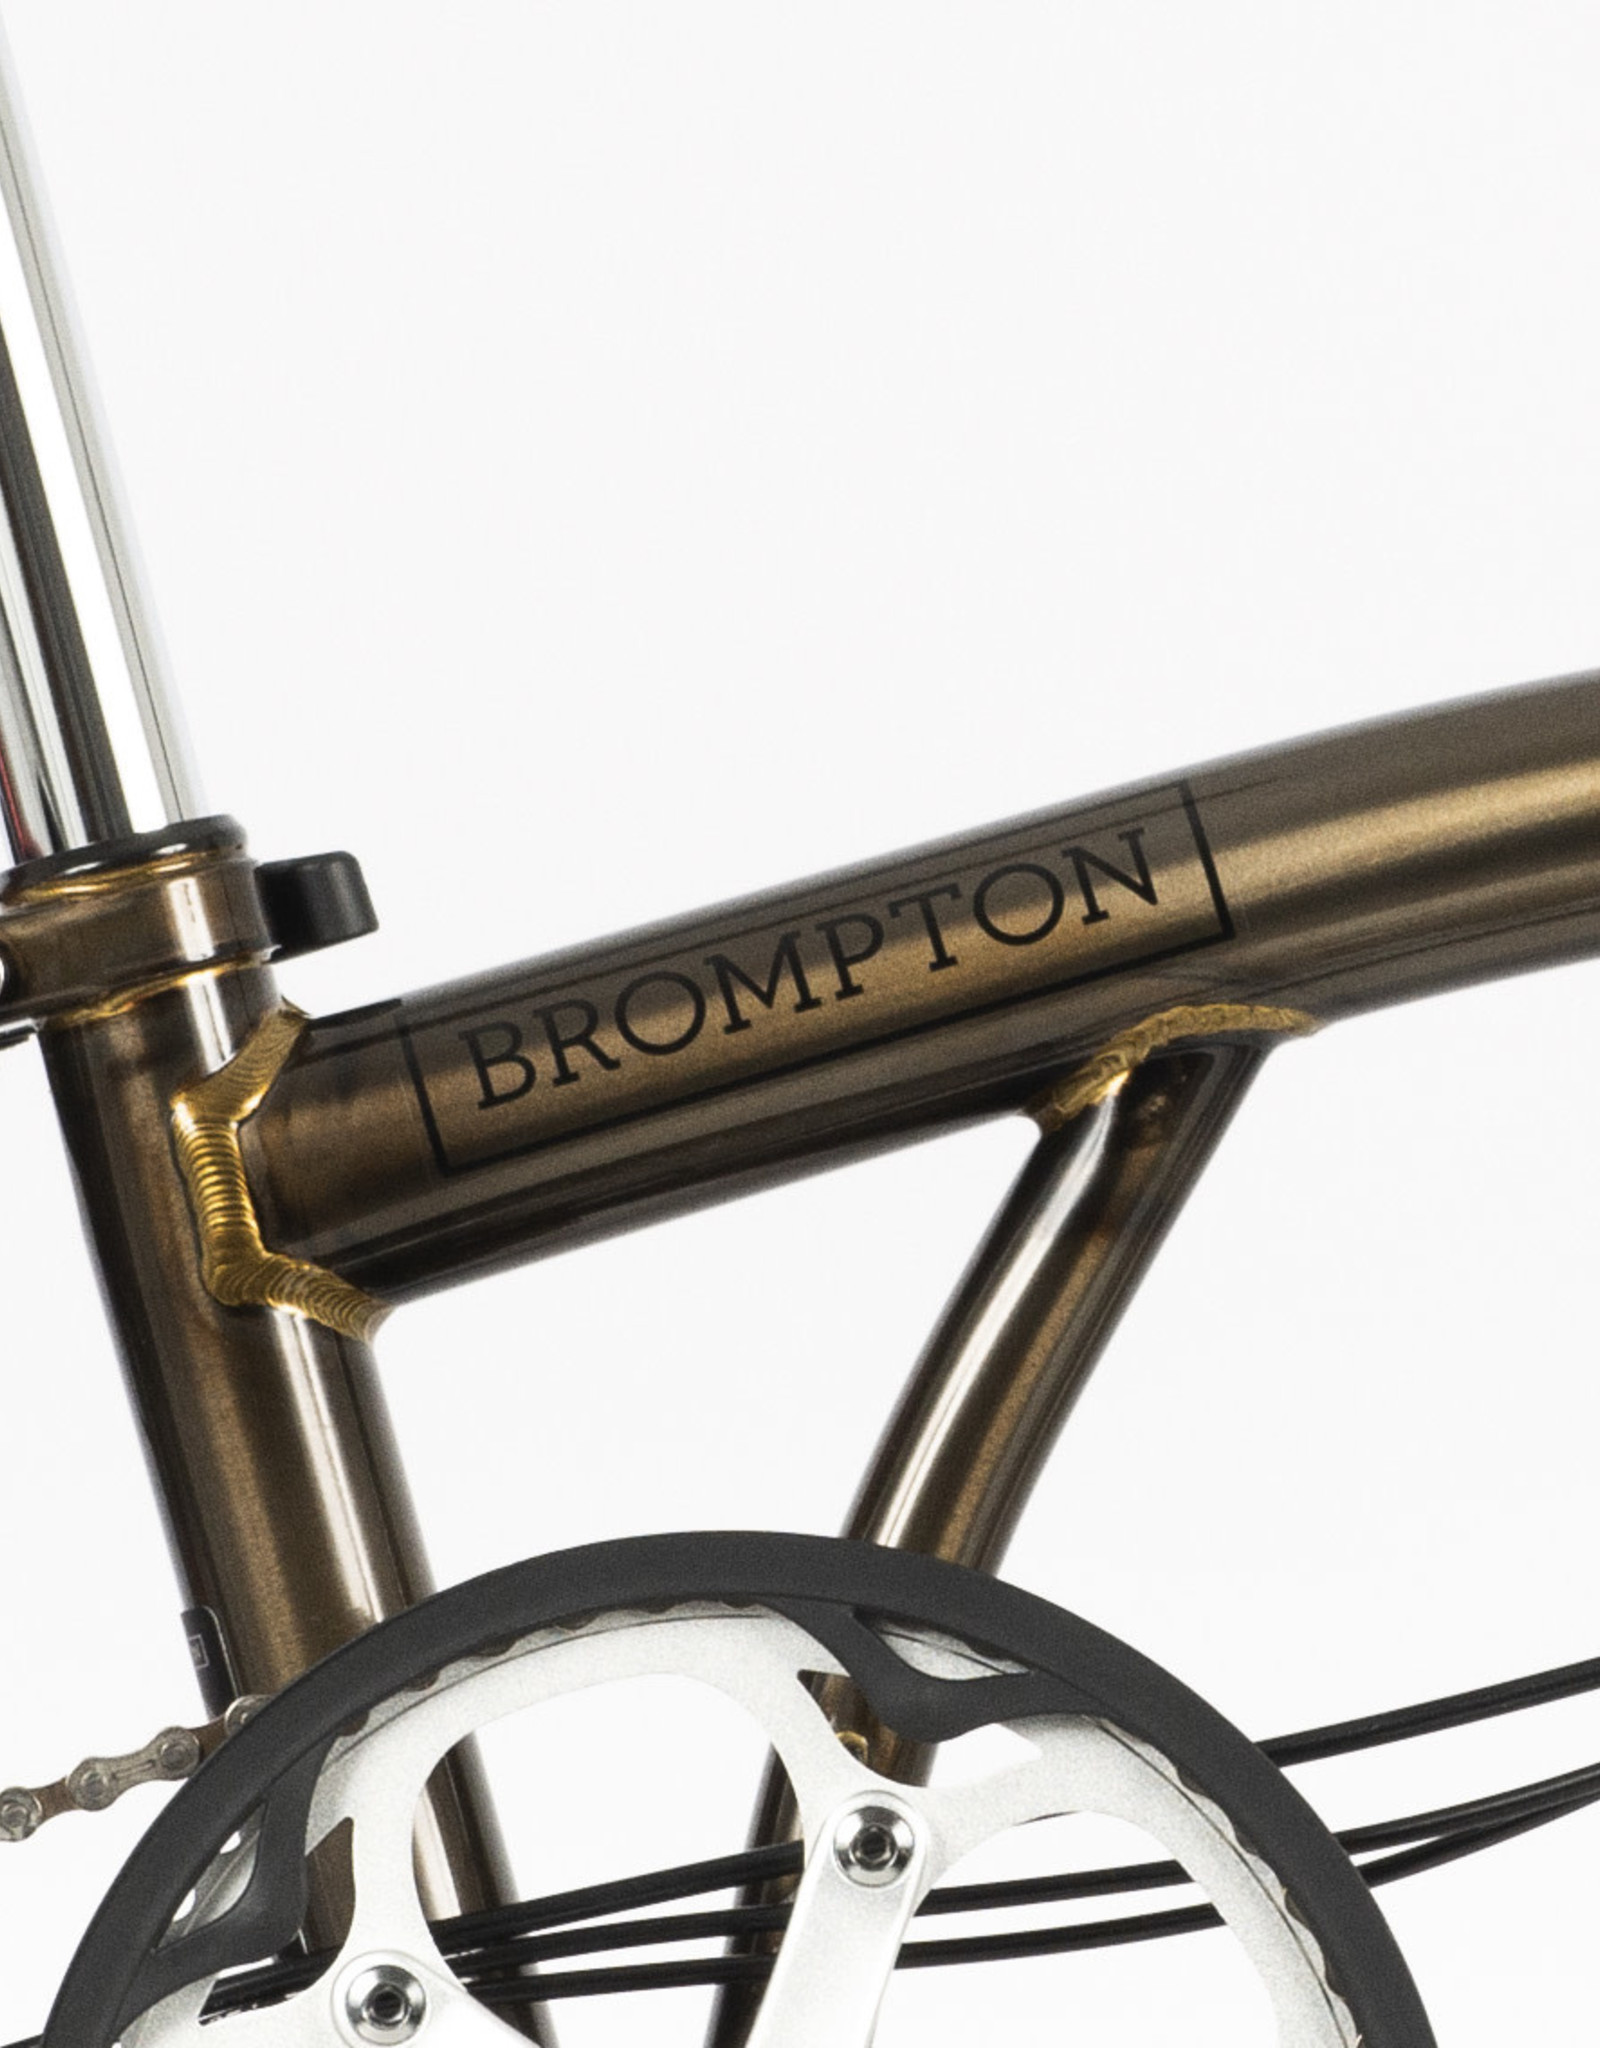 Brompton Brompton - Bike - C Line Explore, Black Lacquer, M Handlebar, Rear Rack, Dynamo, Extended Seatpost, Brooks B17 Special Short saddle.